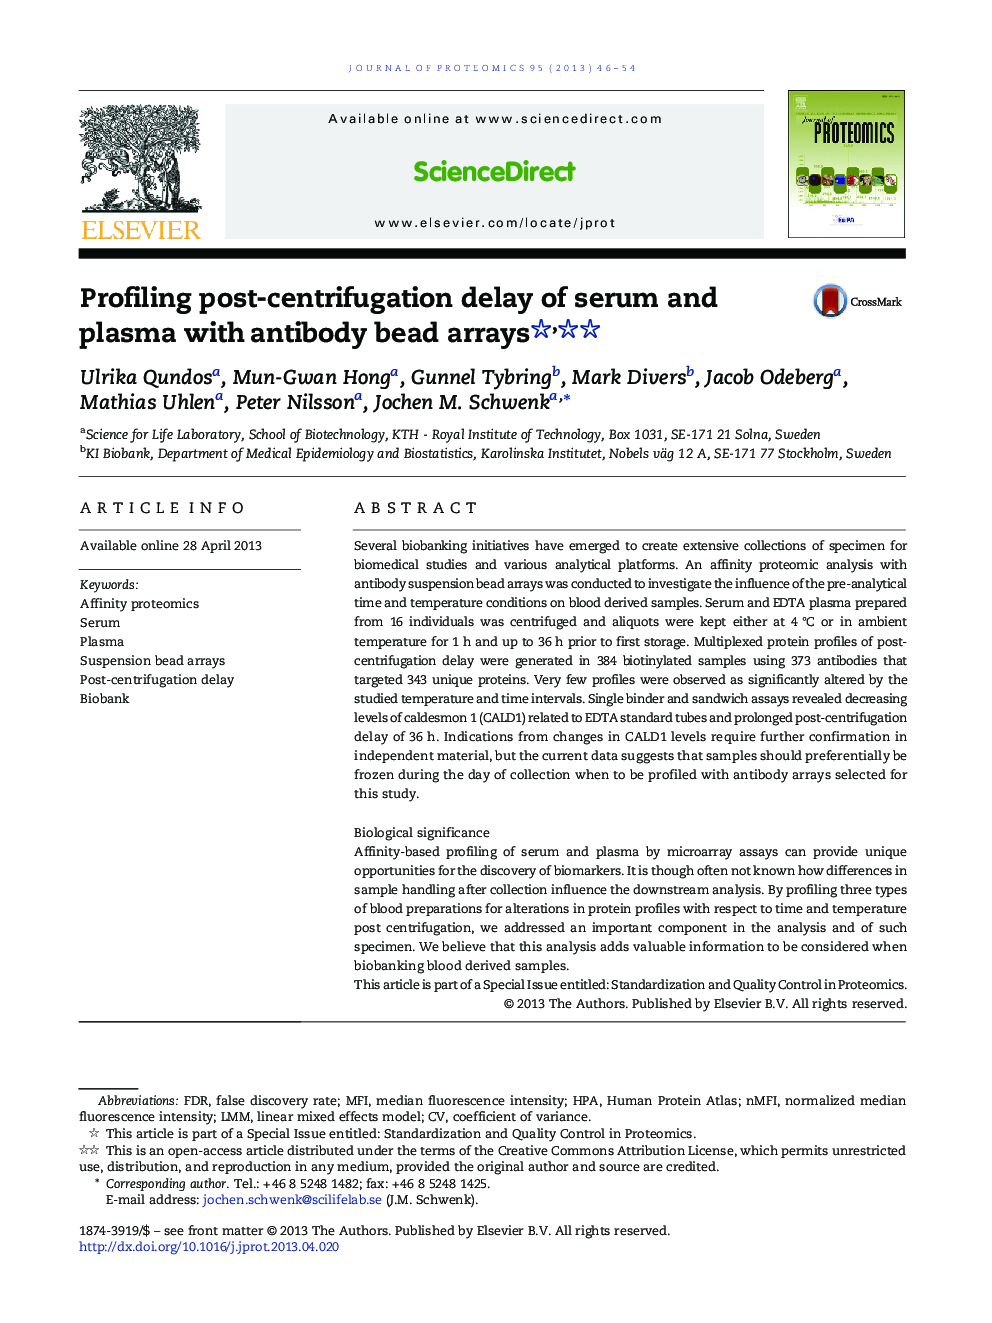 Profiling post-centrifugation delay of serum and plasma with antibody bead arrays